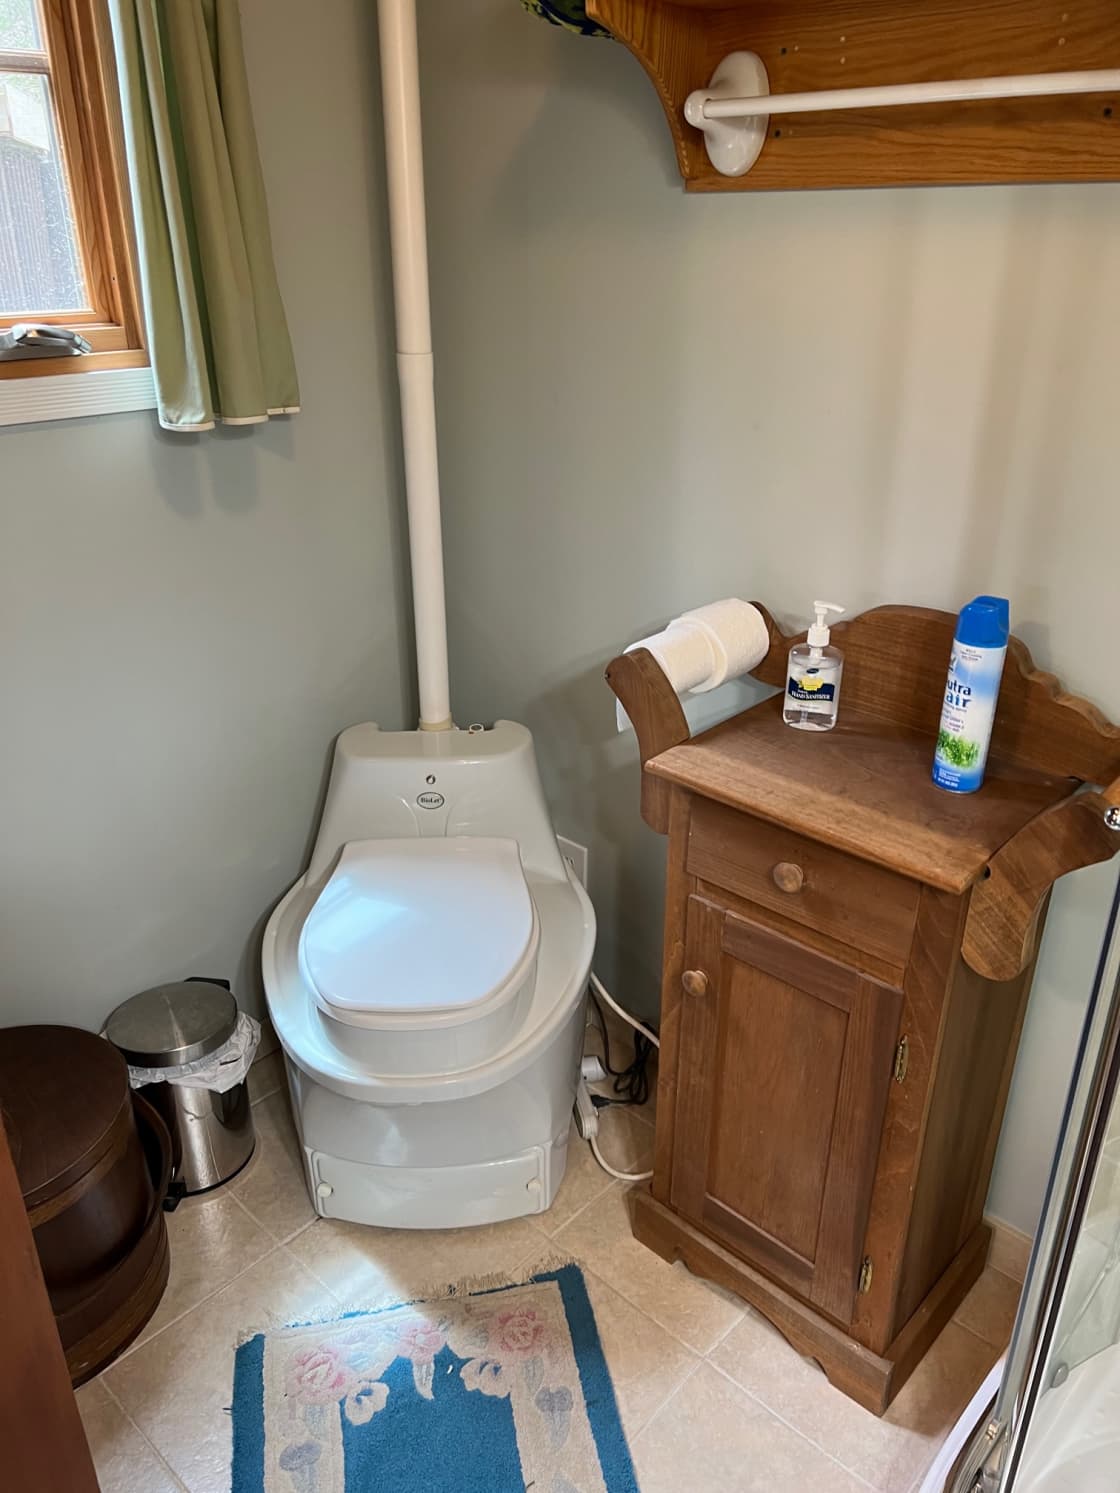 Bathroom showing composting toilet.